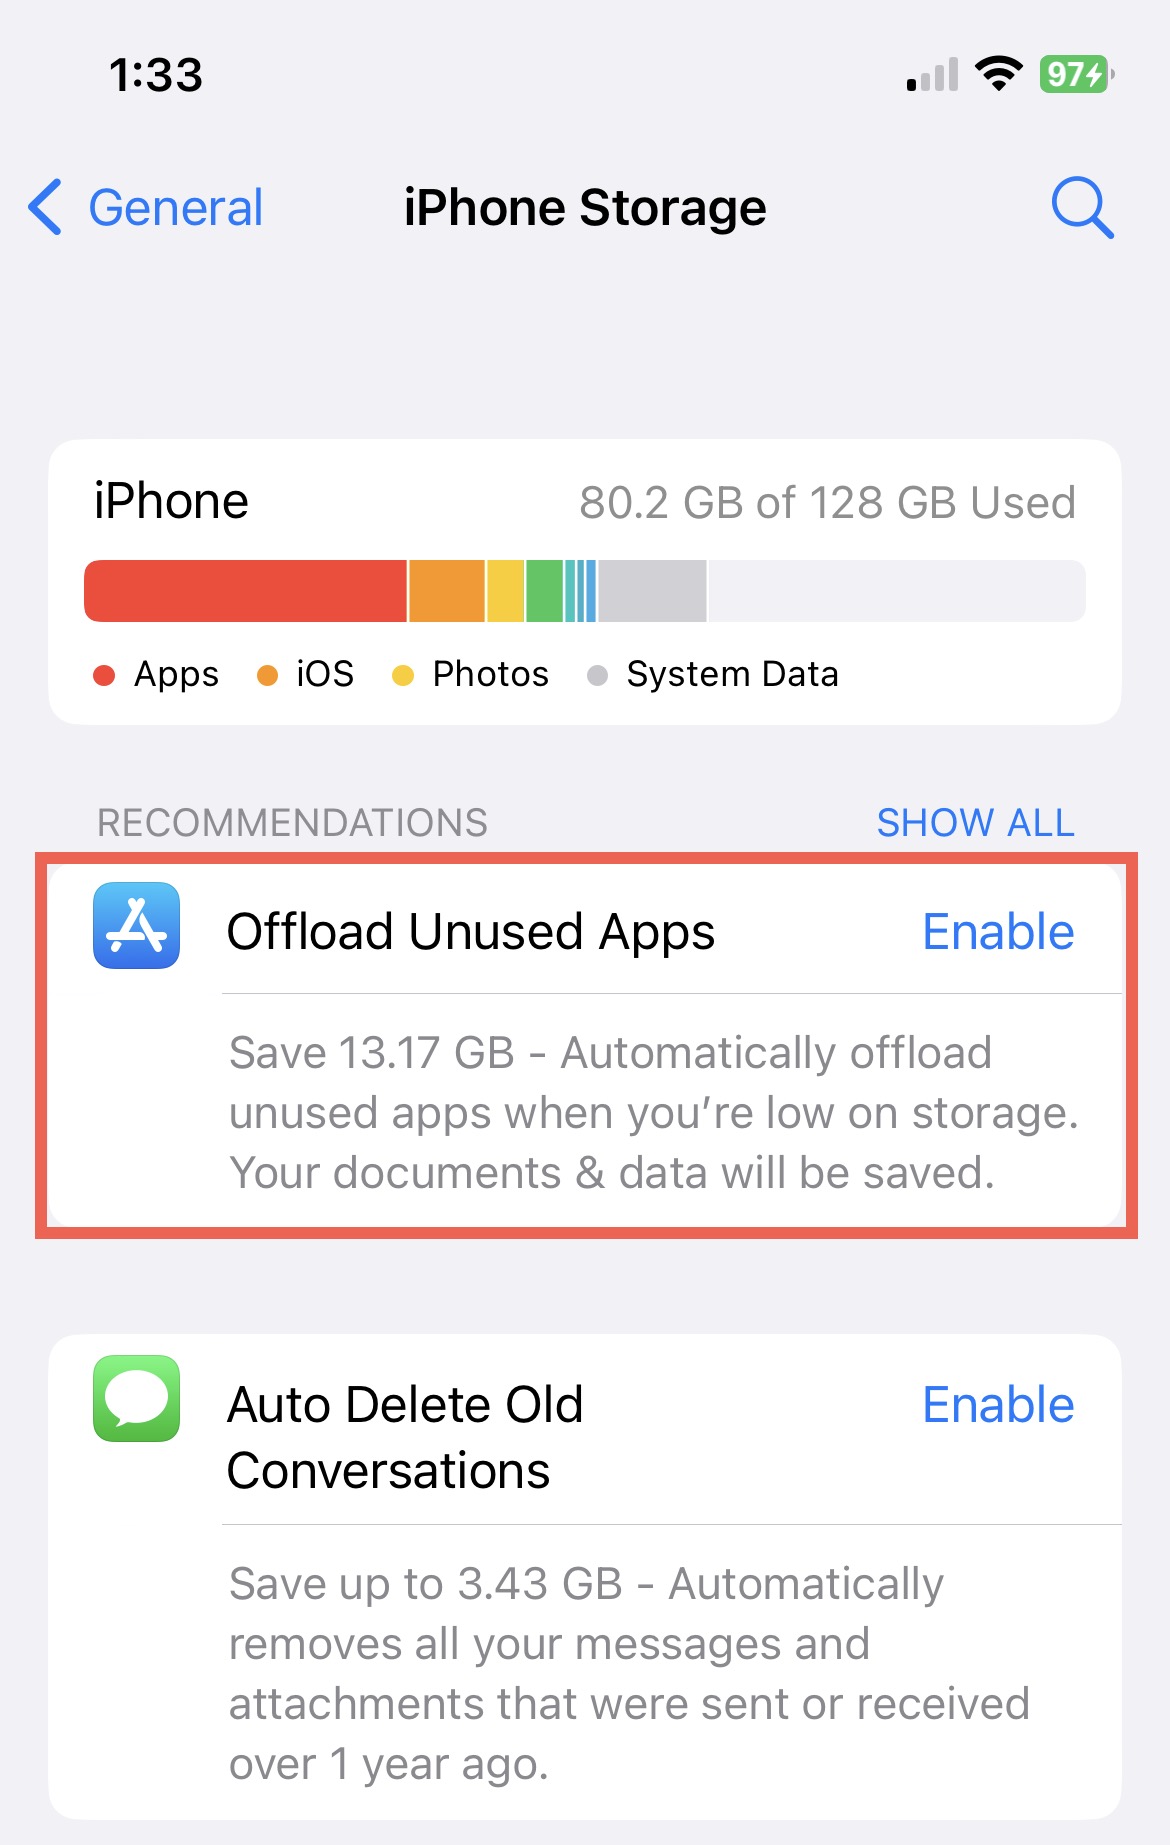 Offload Unused Apps in iPhone Storage